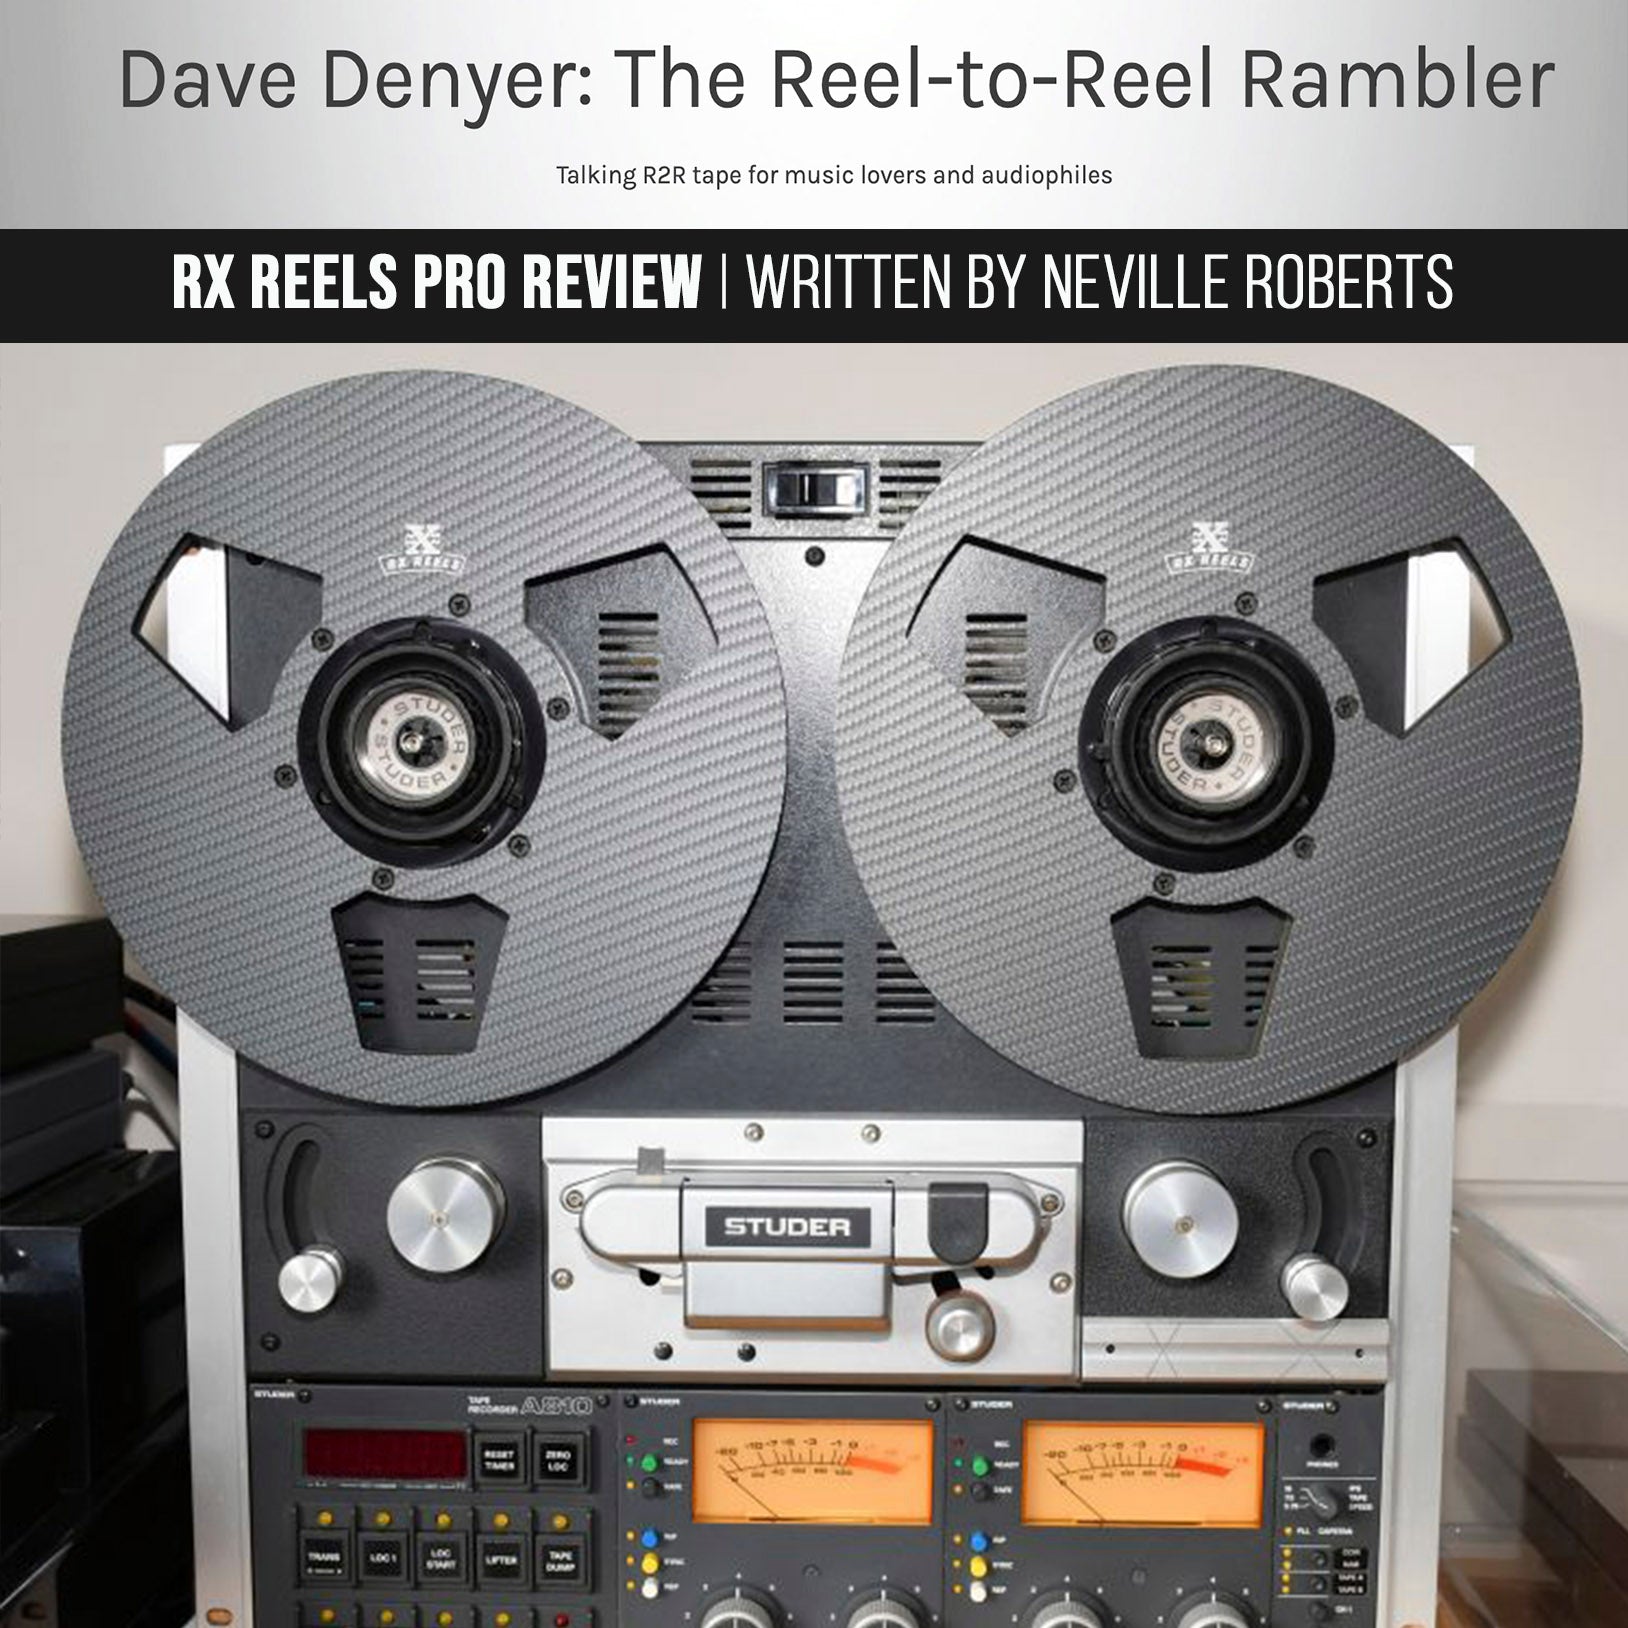 Hi-Fi Journalist Neville Roberts Reviews RX Reels